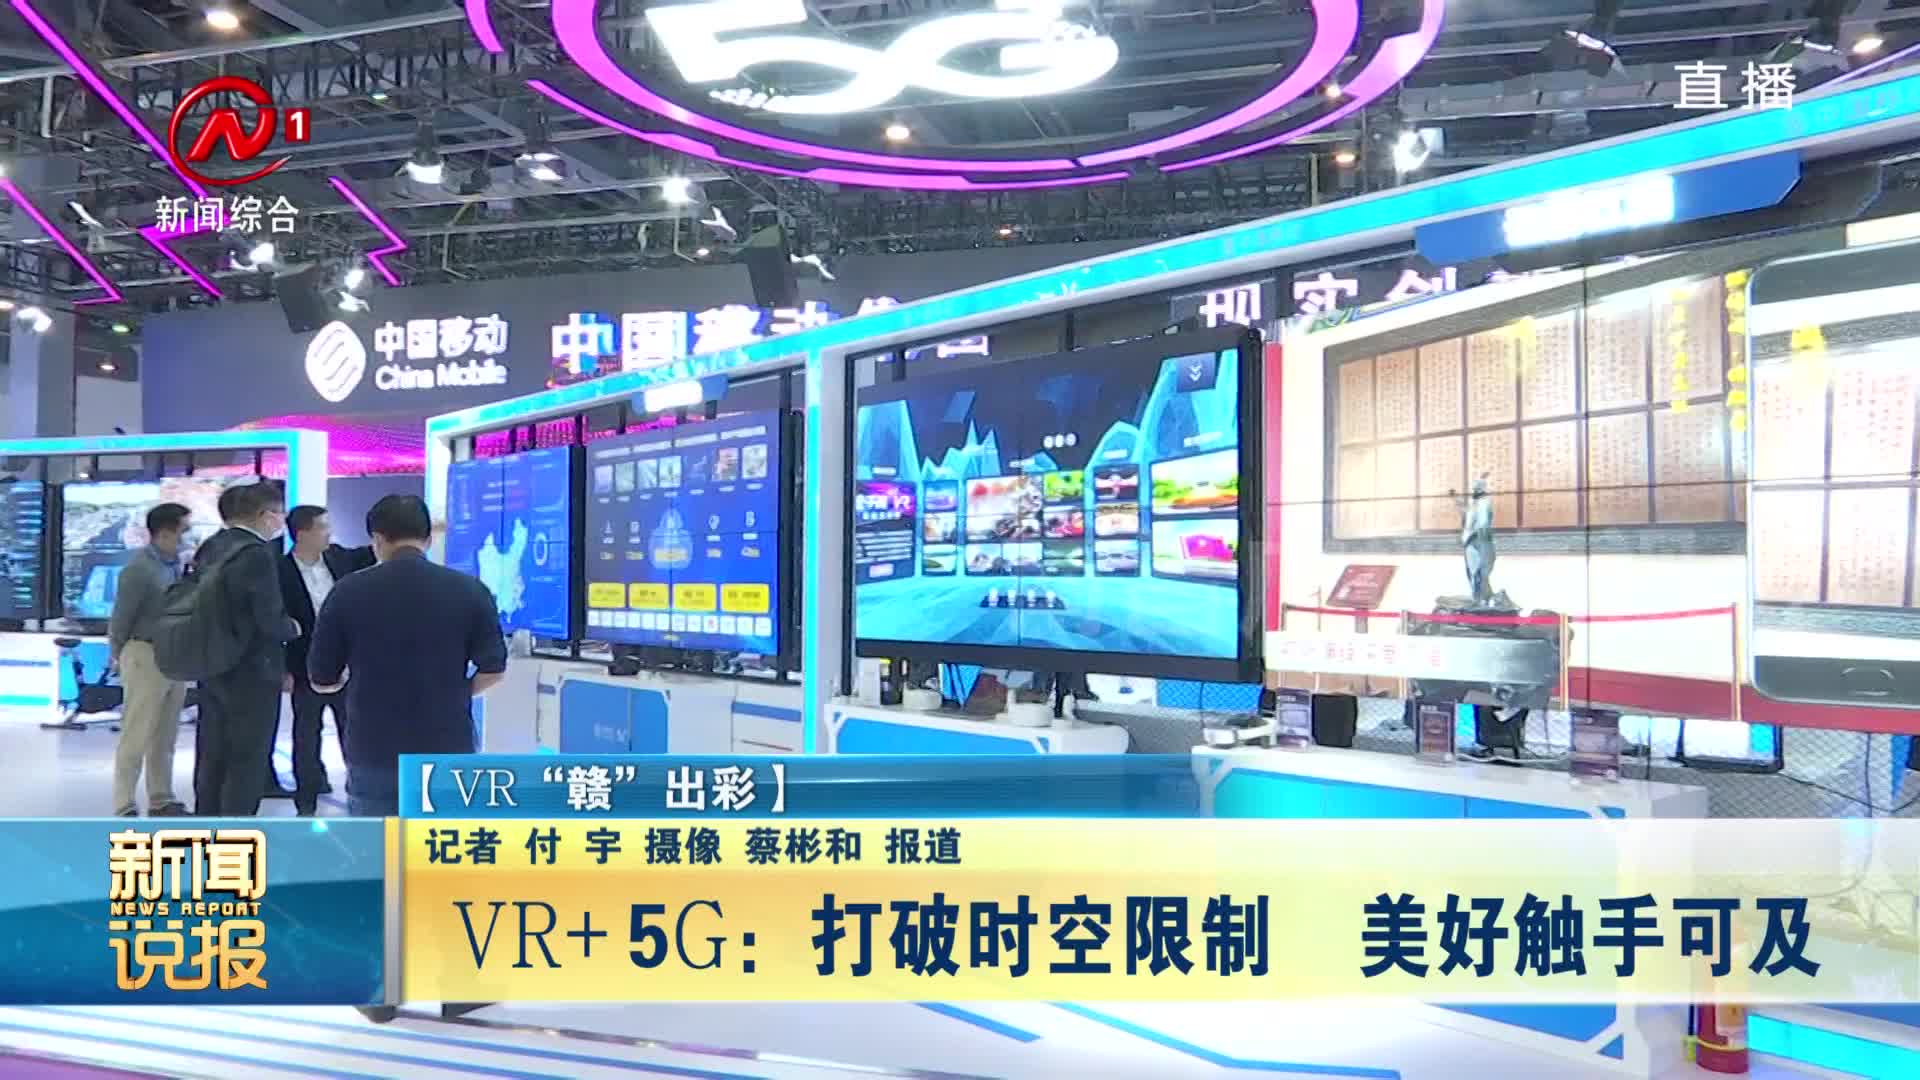 VR+5G：打破时空限制  美好触手可及